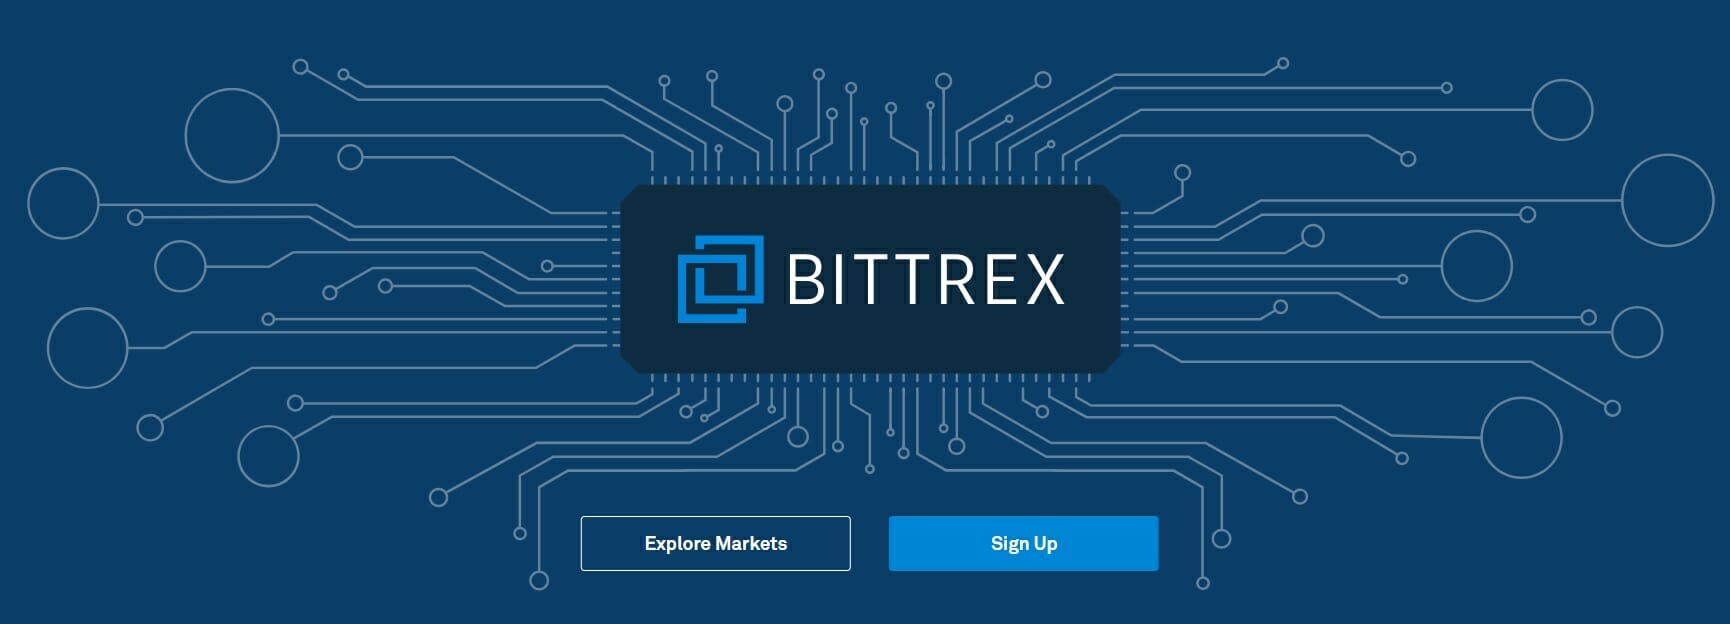 Bittrex ticaret platformu